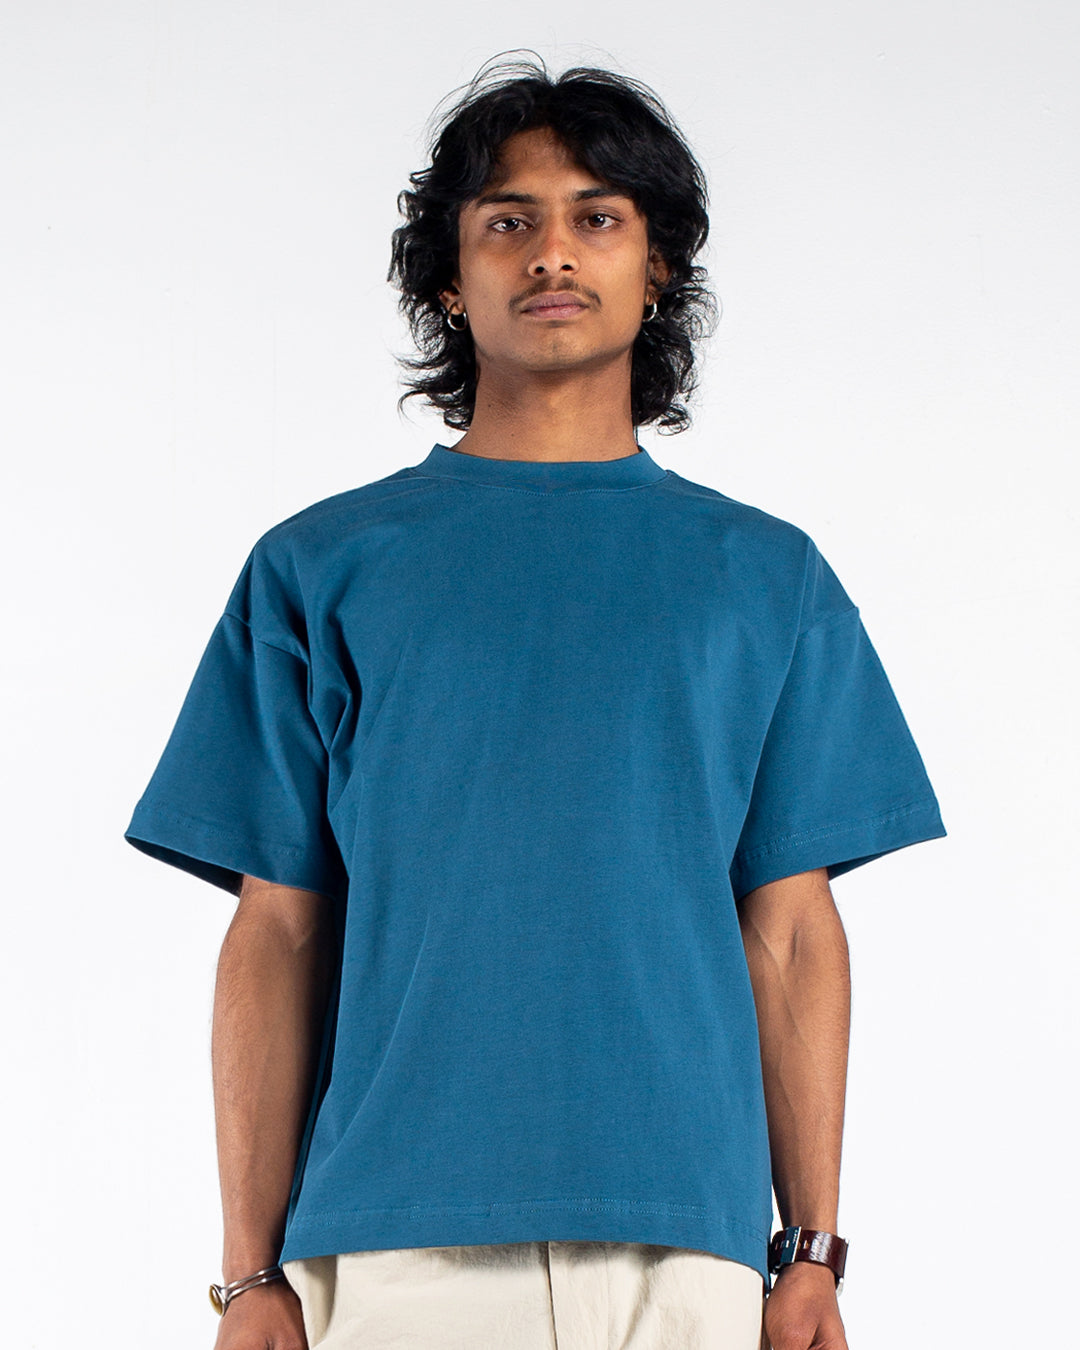 Candice-plain-blank-blue-t-shirt